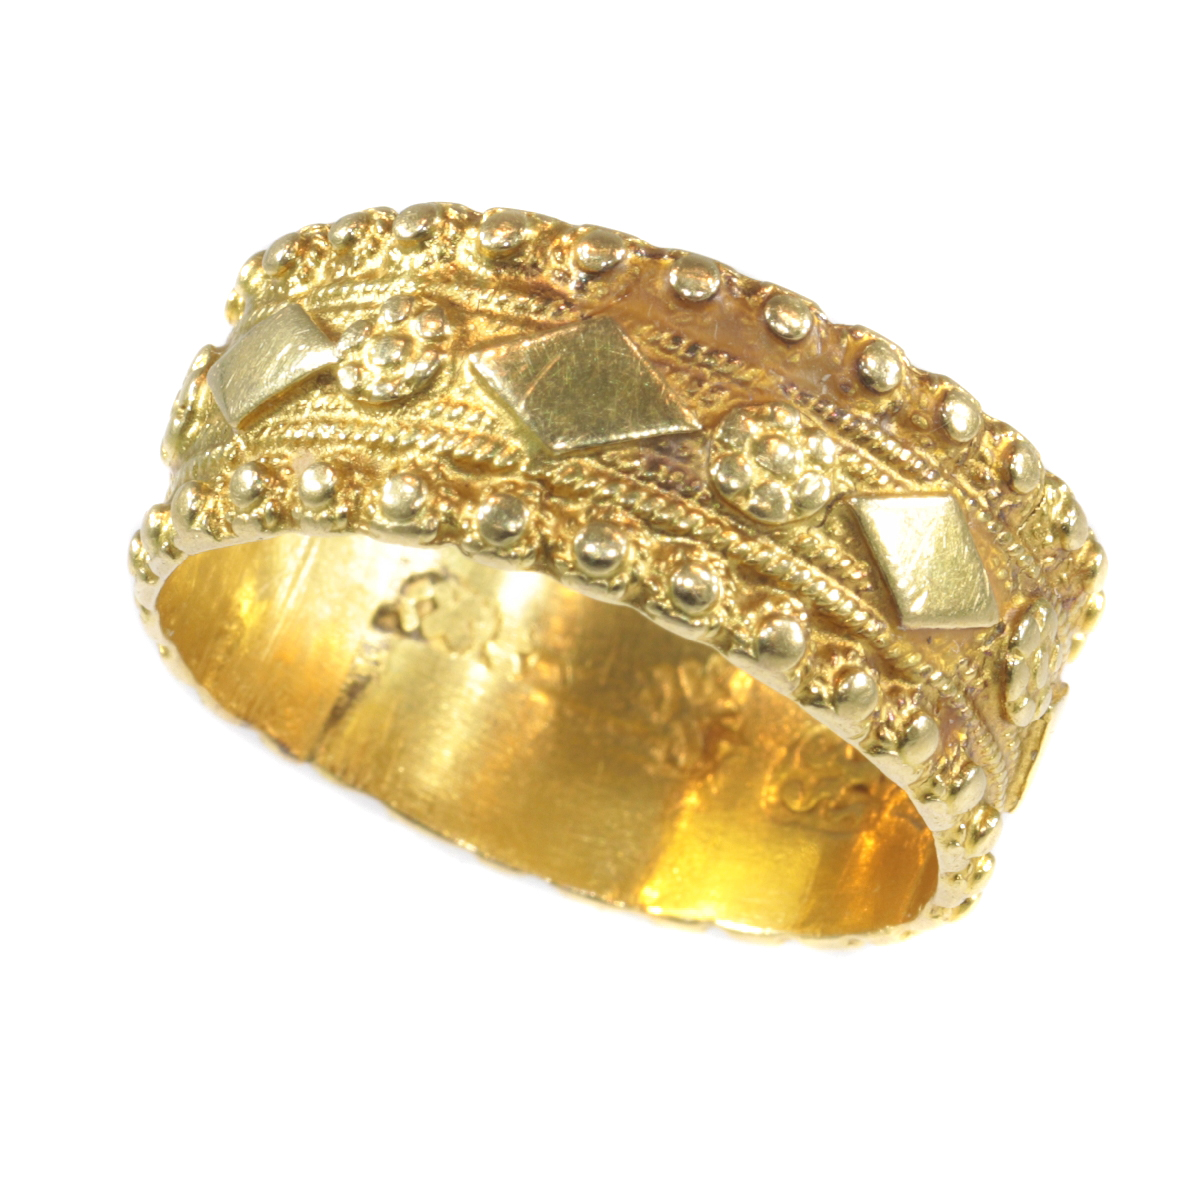 Late 18th Century Dutch gold ring hallmarked with Amsterdam hallmarks